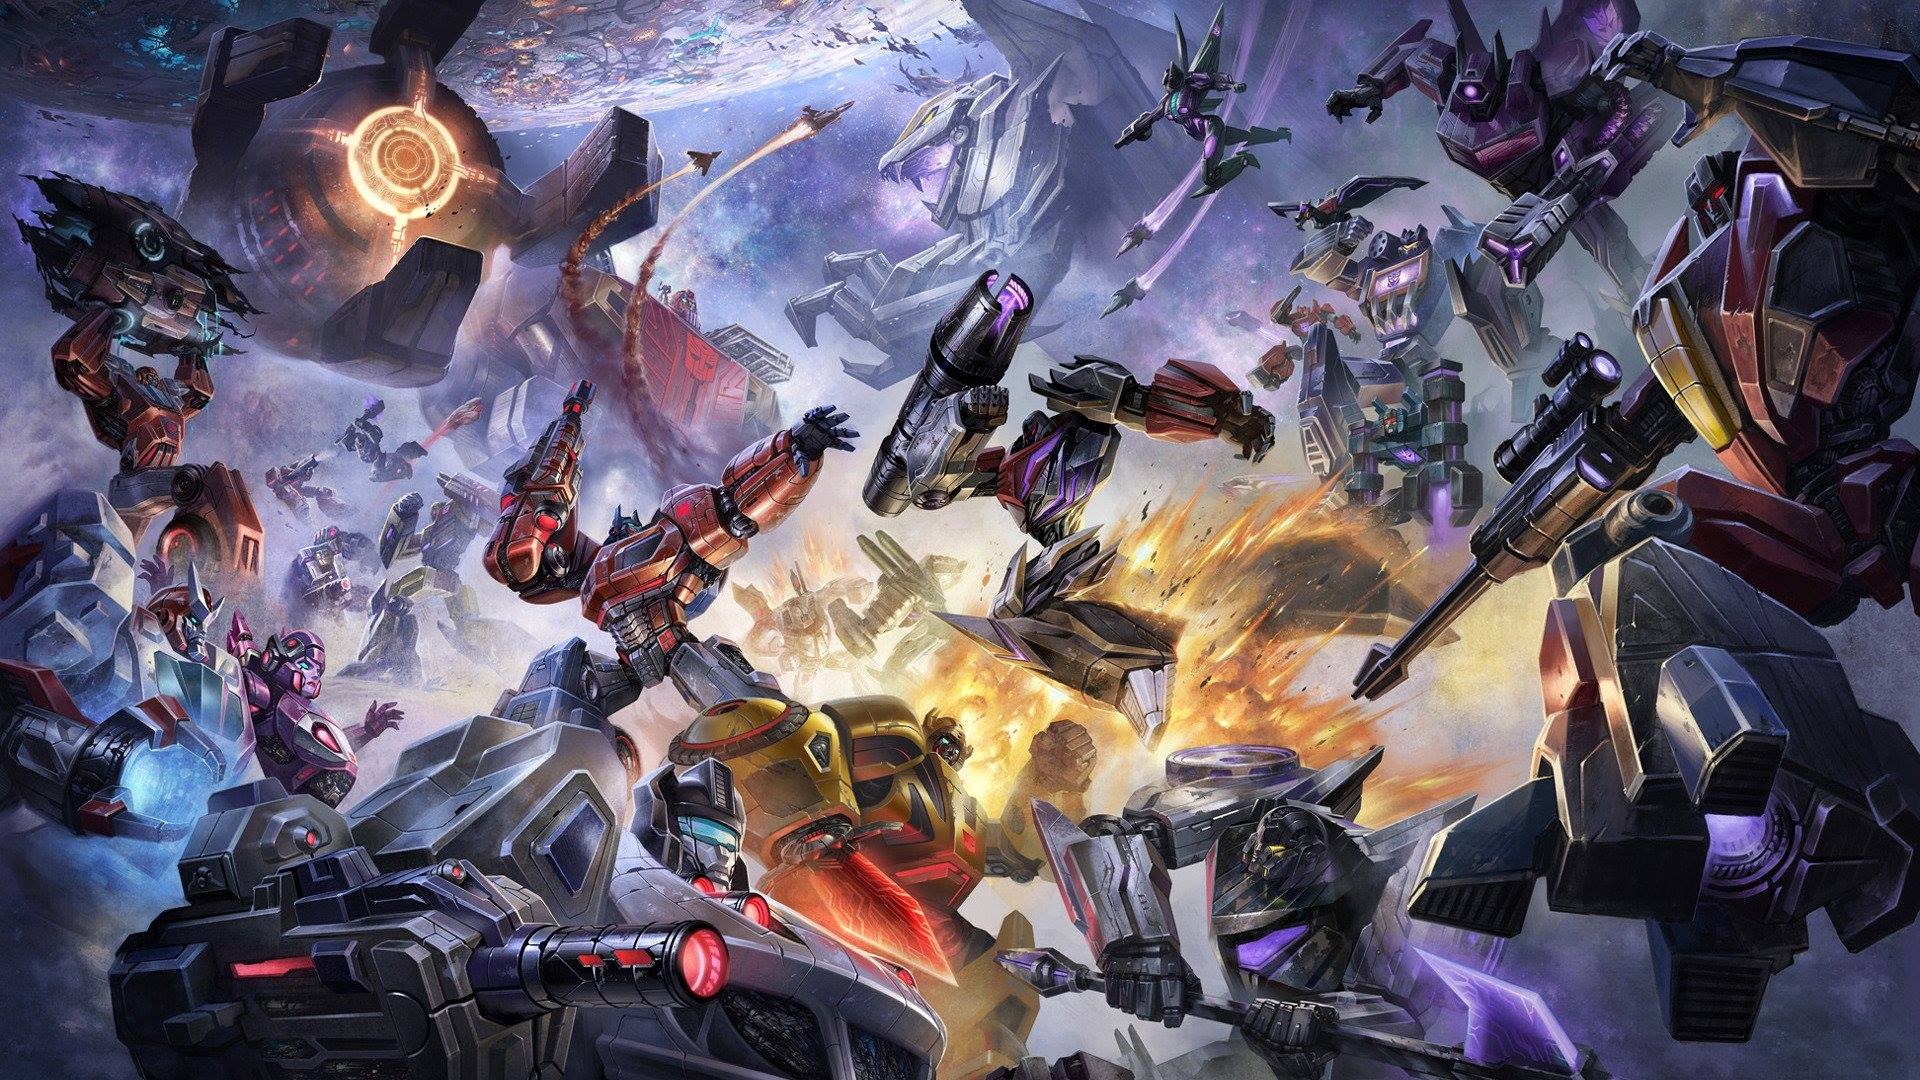 transformers, Fall, Cybertron, Sci fi, Mecha, Action, Fighting, Shooter Wallpaper